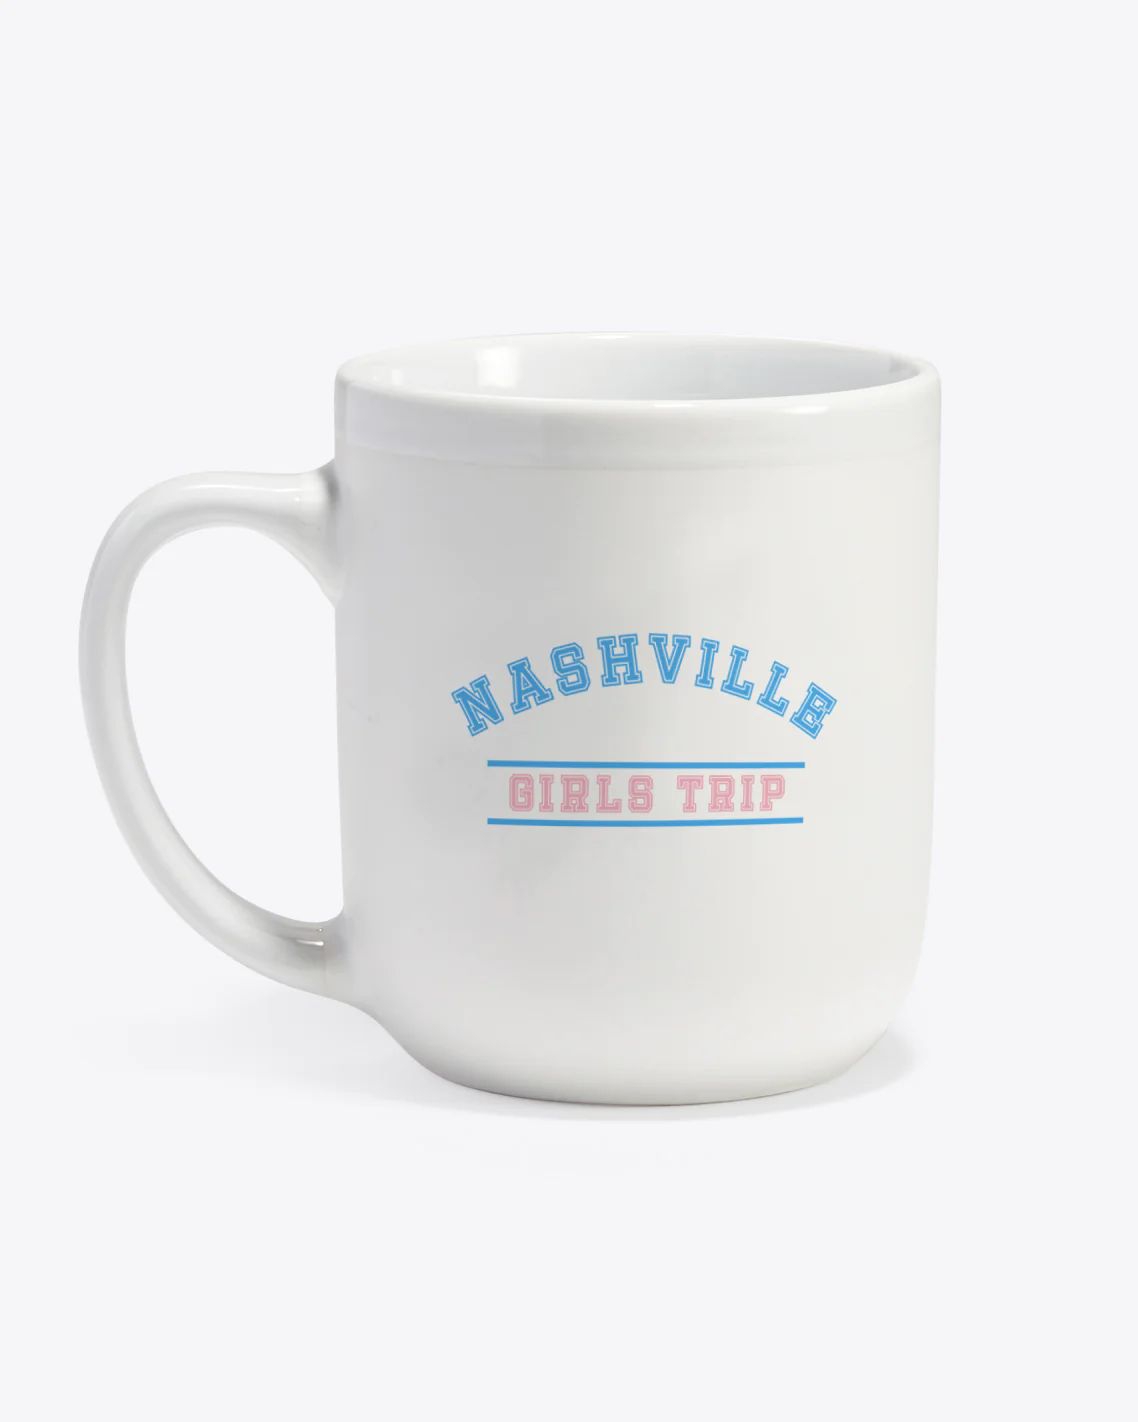 Nashville Girls Trip Mug | Draper James (US)